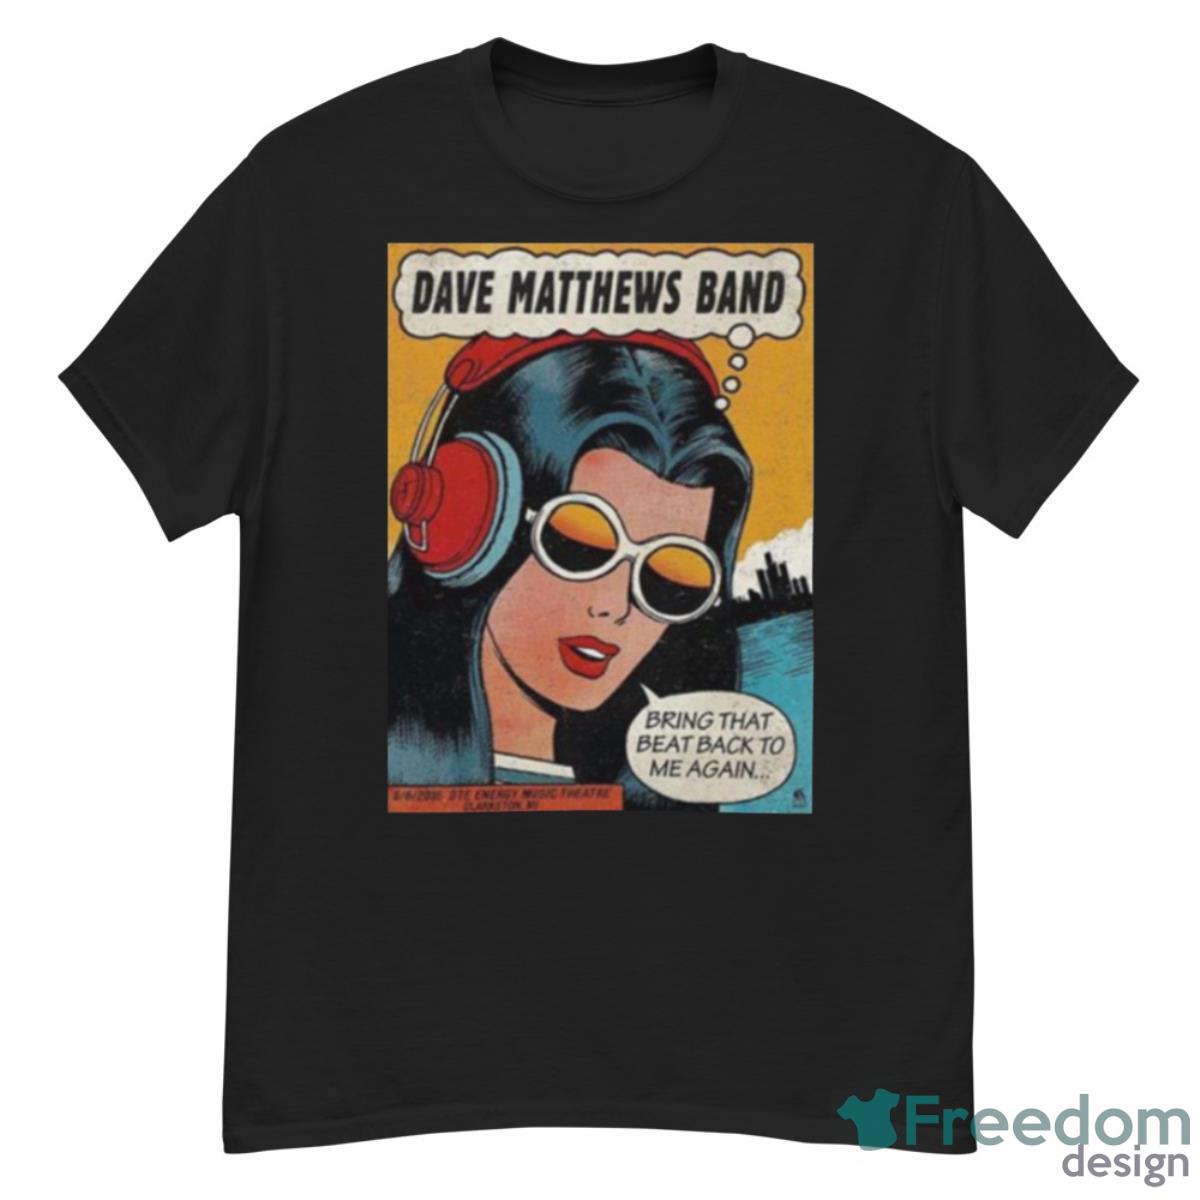 Bring That Dave Matthews Band Shirt - G500 Men’s Classic T-Shirt